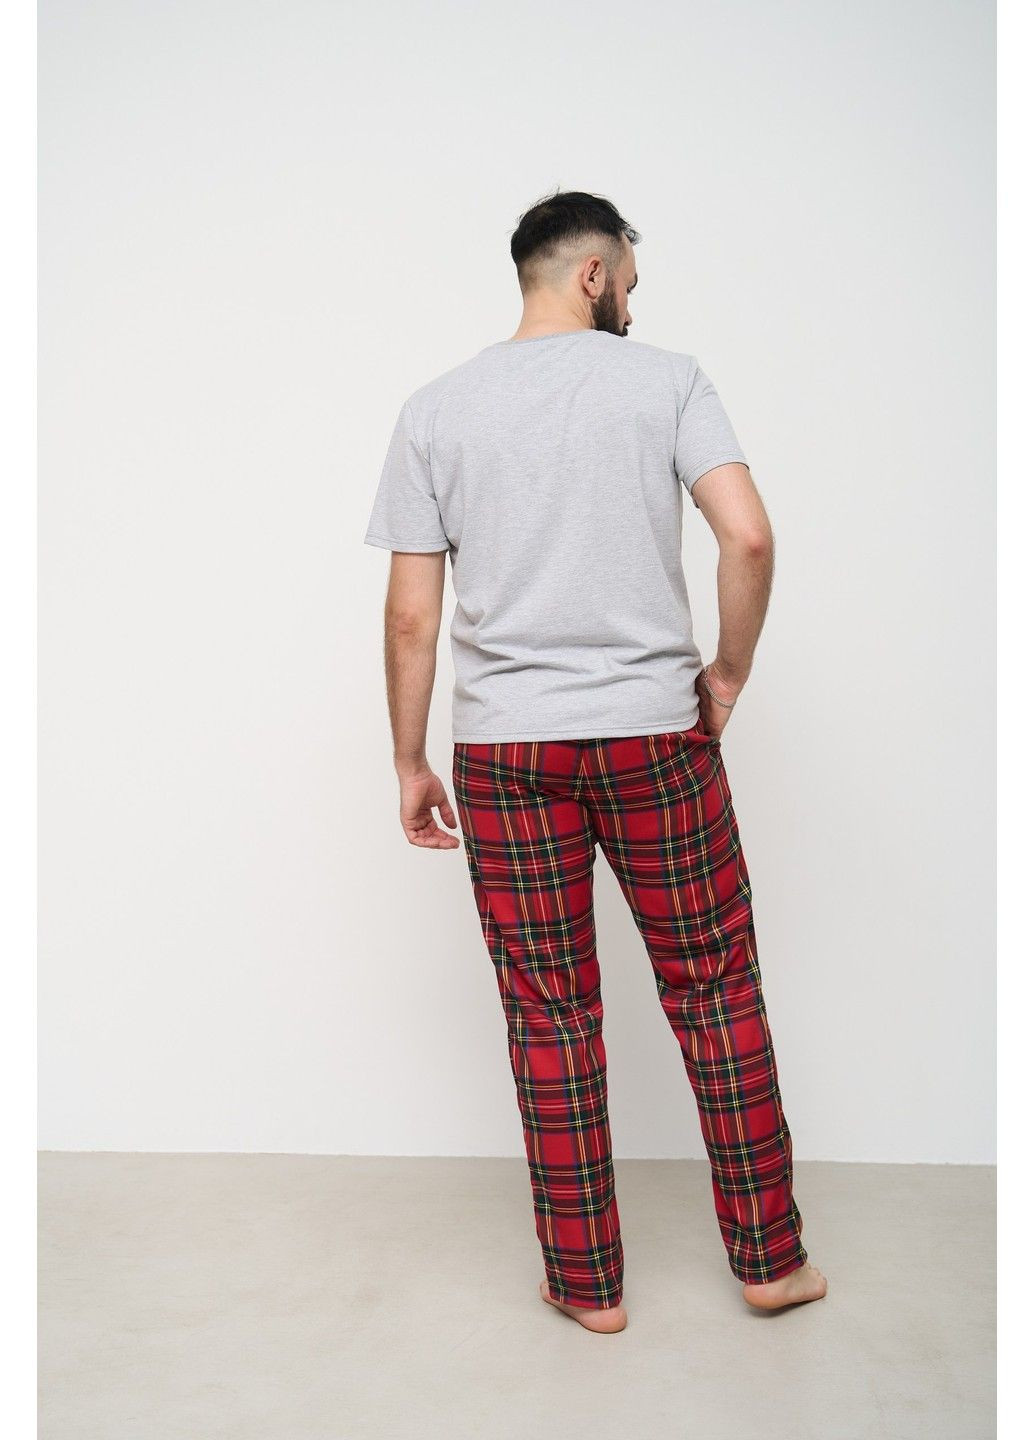 Пижама мужская футболка серая + штаны в клетку красные Handy Wear (293275172)